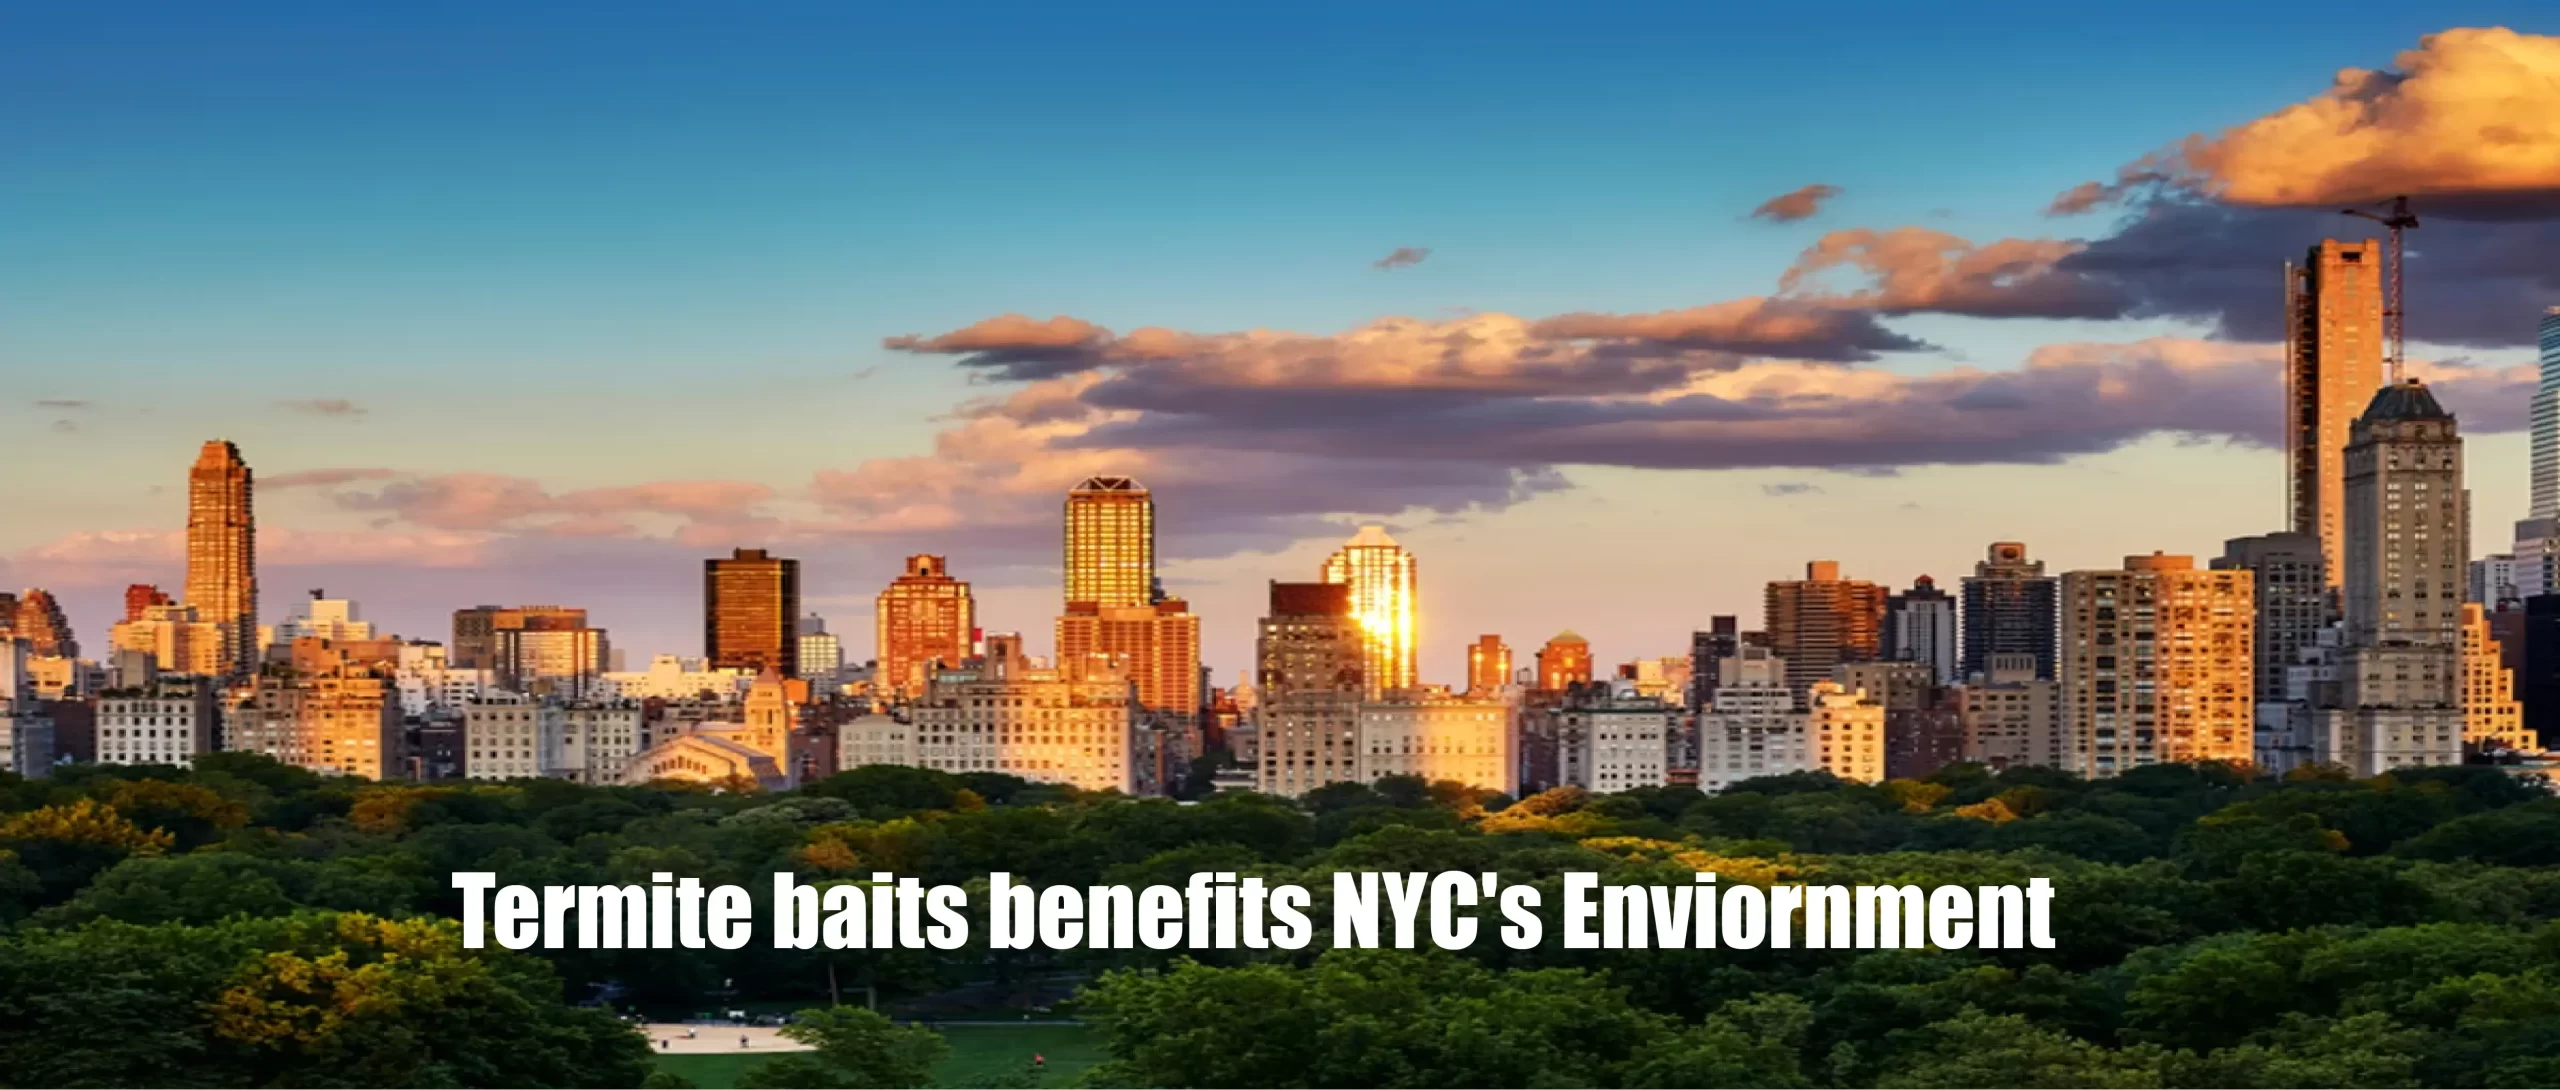 termite baits NYC Benefits